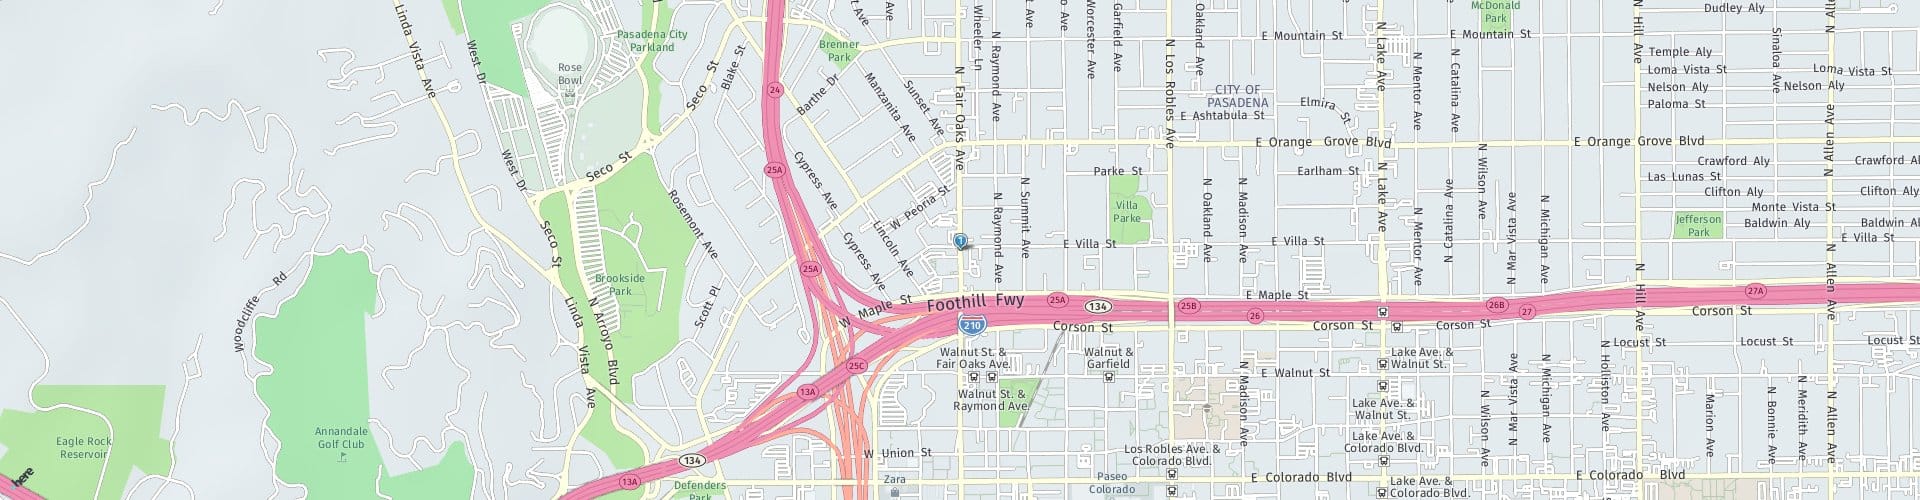 Location Map: 473 N Fair Oaks Ave Pasadena, CA 91103